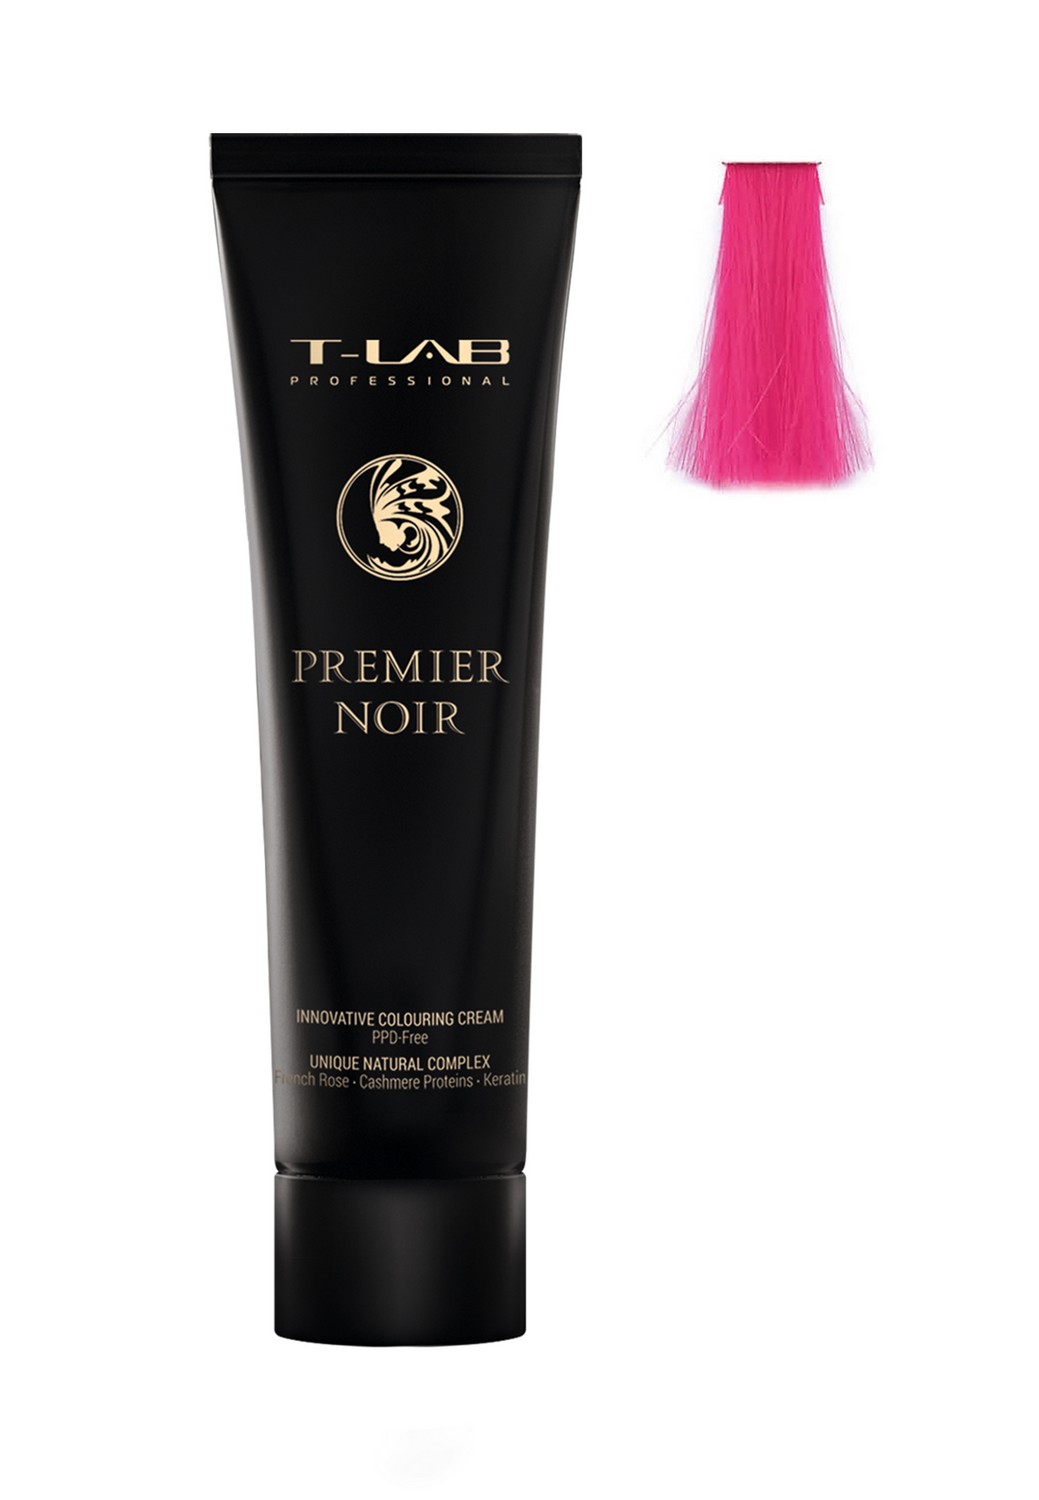 Крем-фарба T-LAB Professional Premier Noir colouring cream, Pink - фото 2